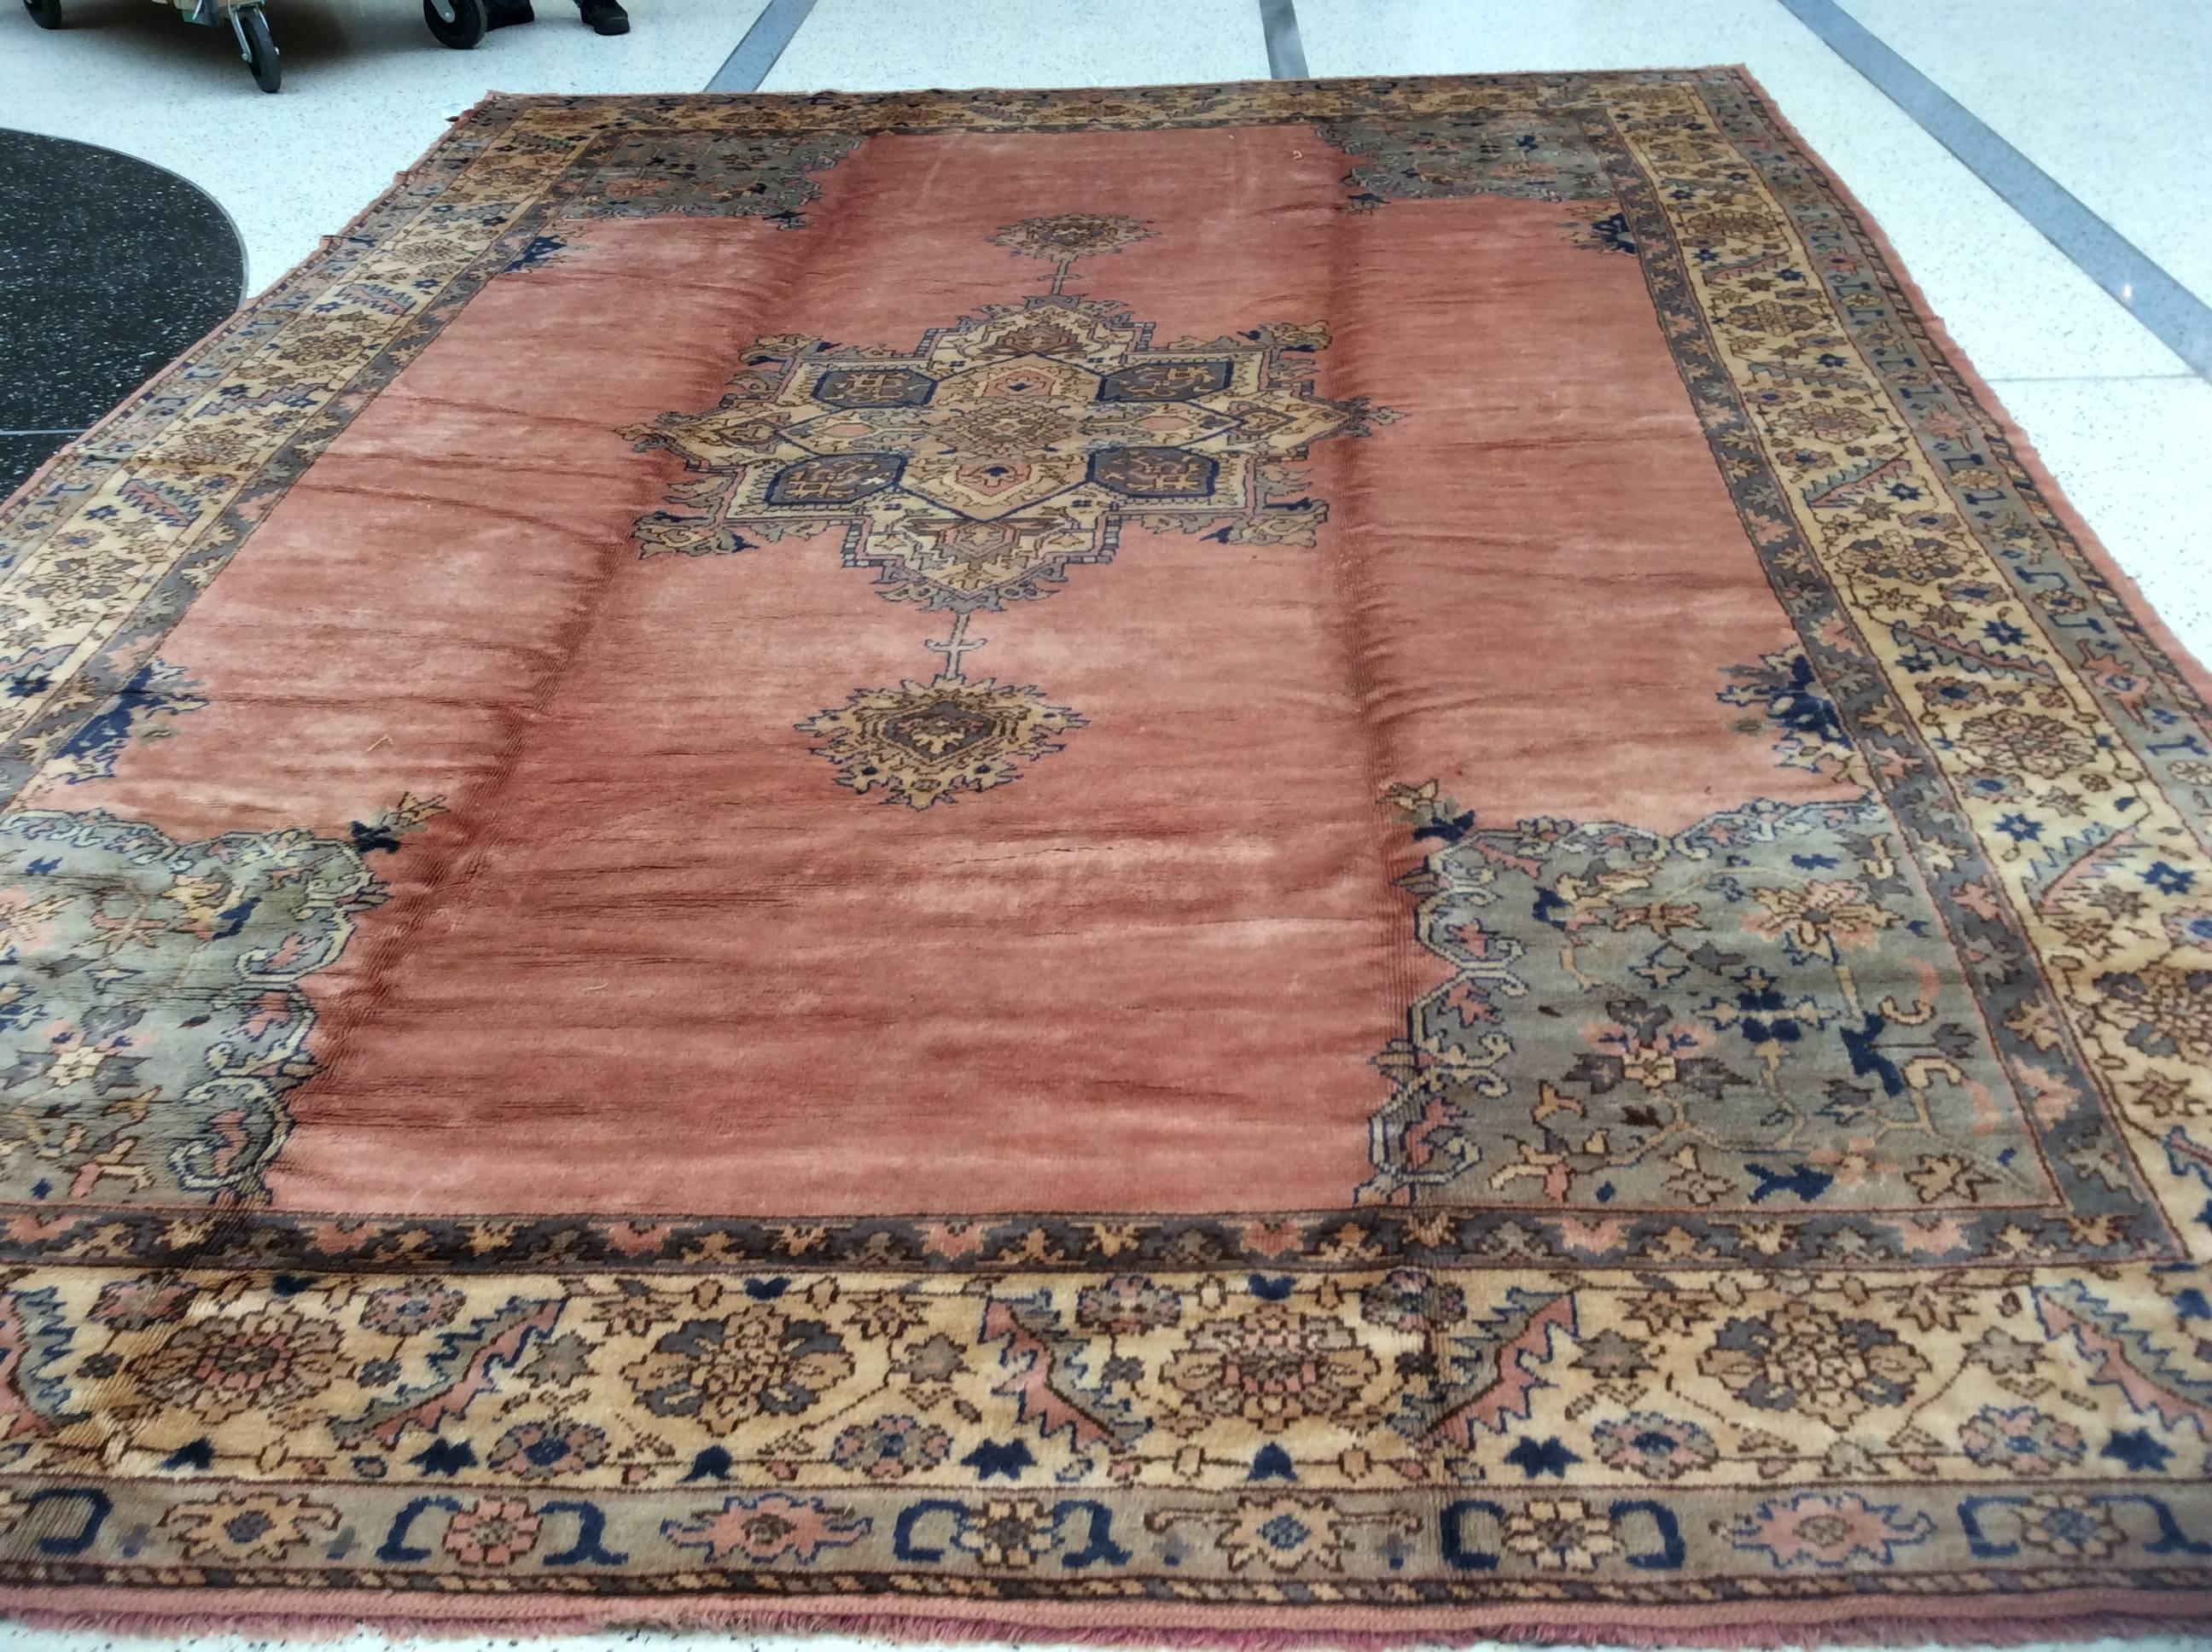 Antique Oushak rug.

Measurement: 10'10